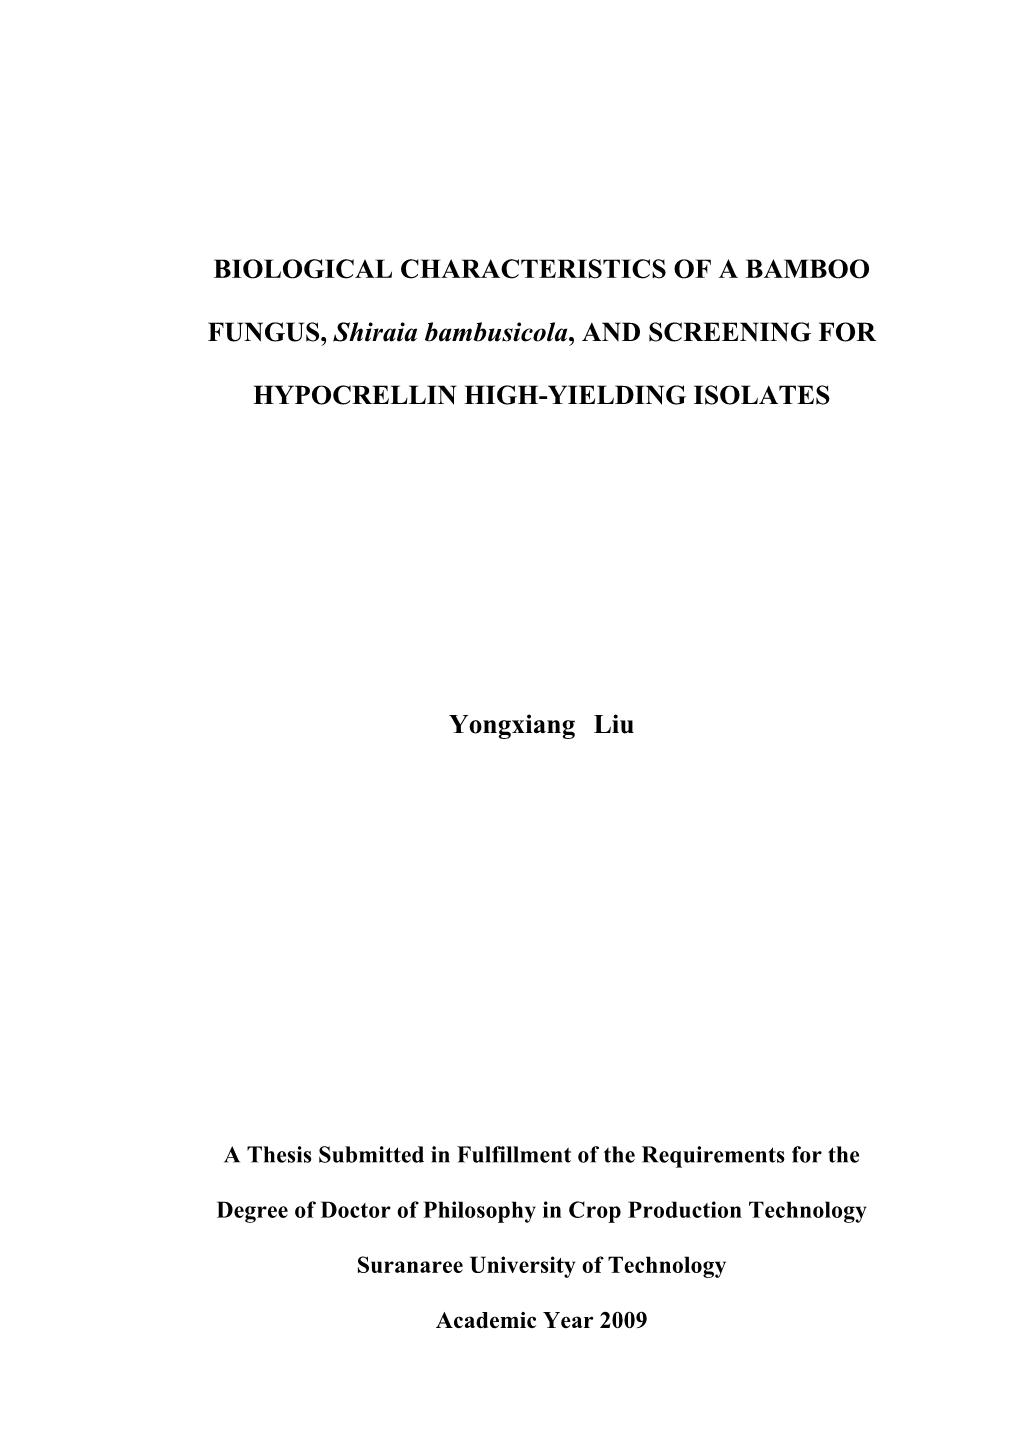 BIOLOGICAL CHARACTERISTICS of a BAMBOO FUNGUS, Shiraia